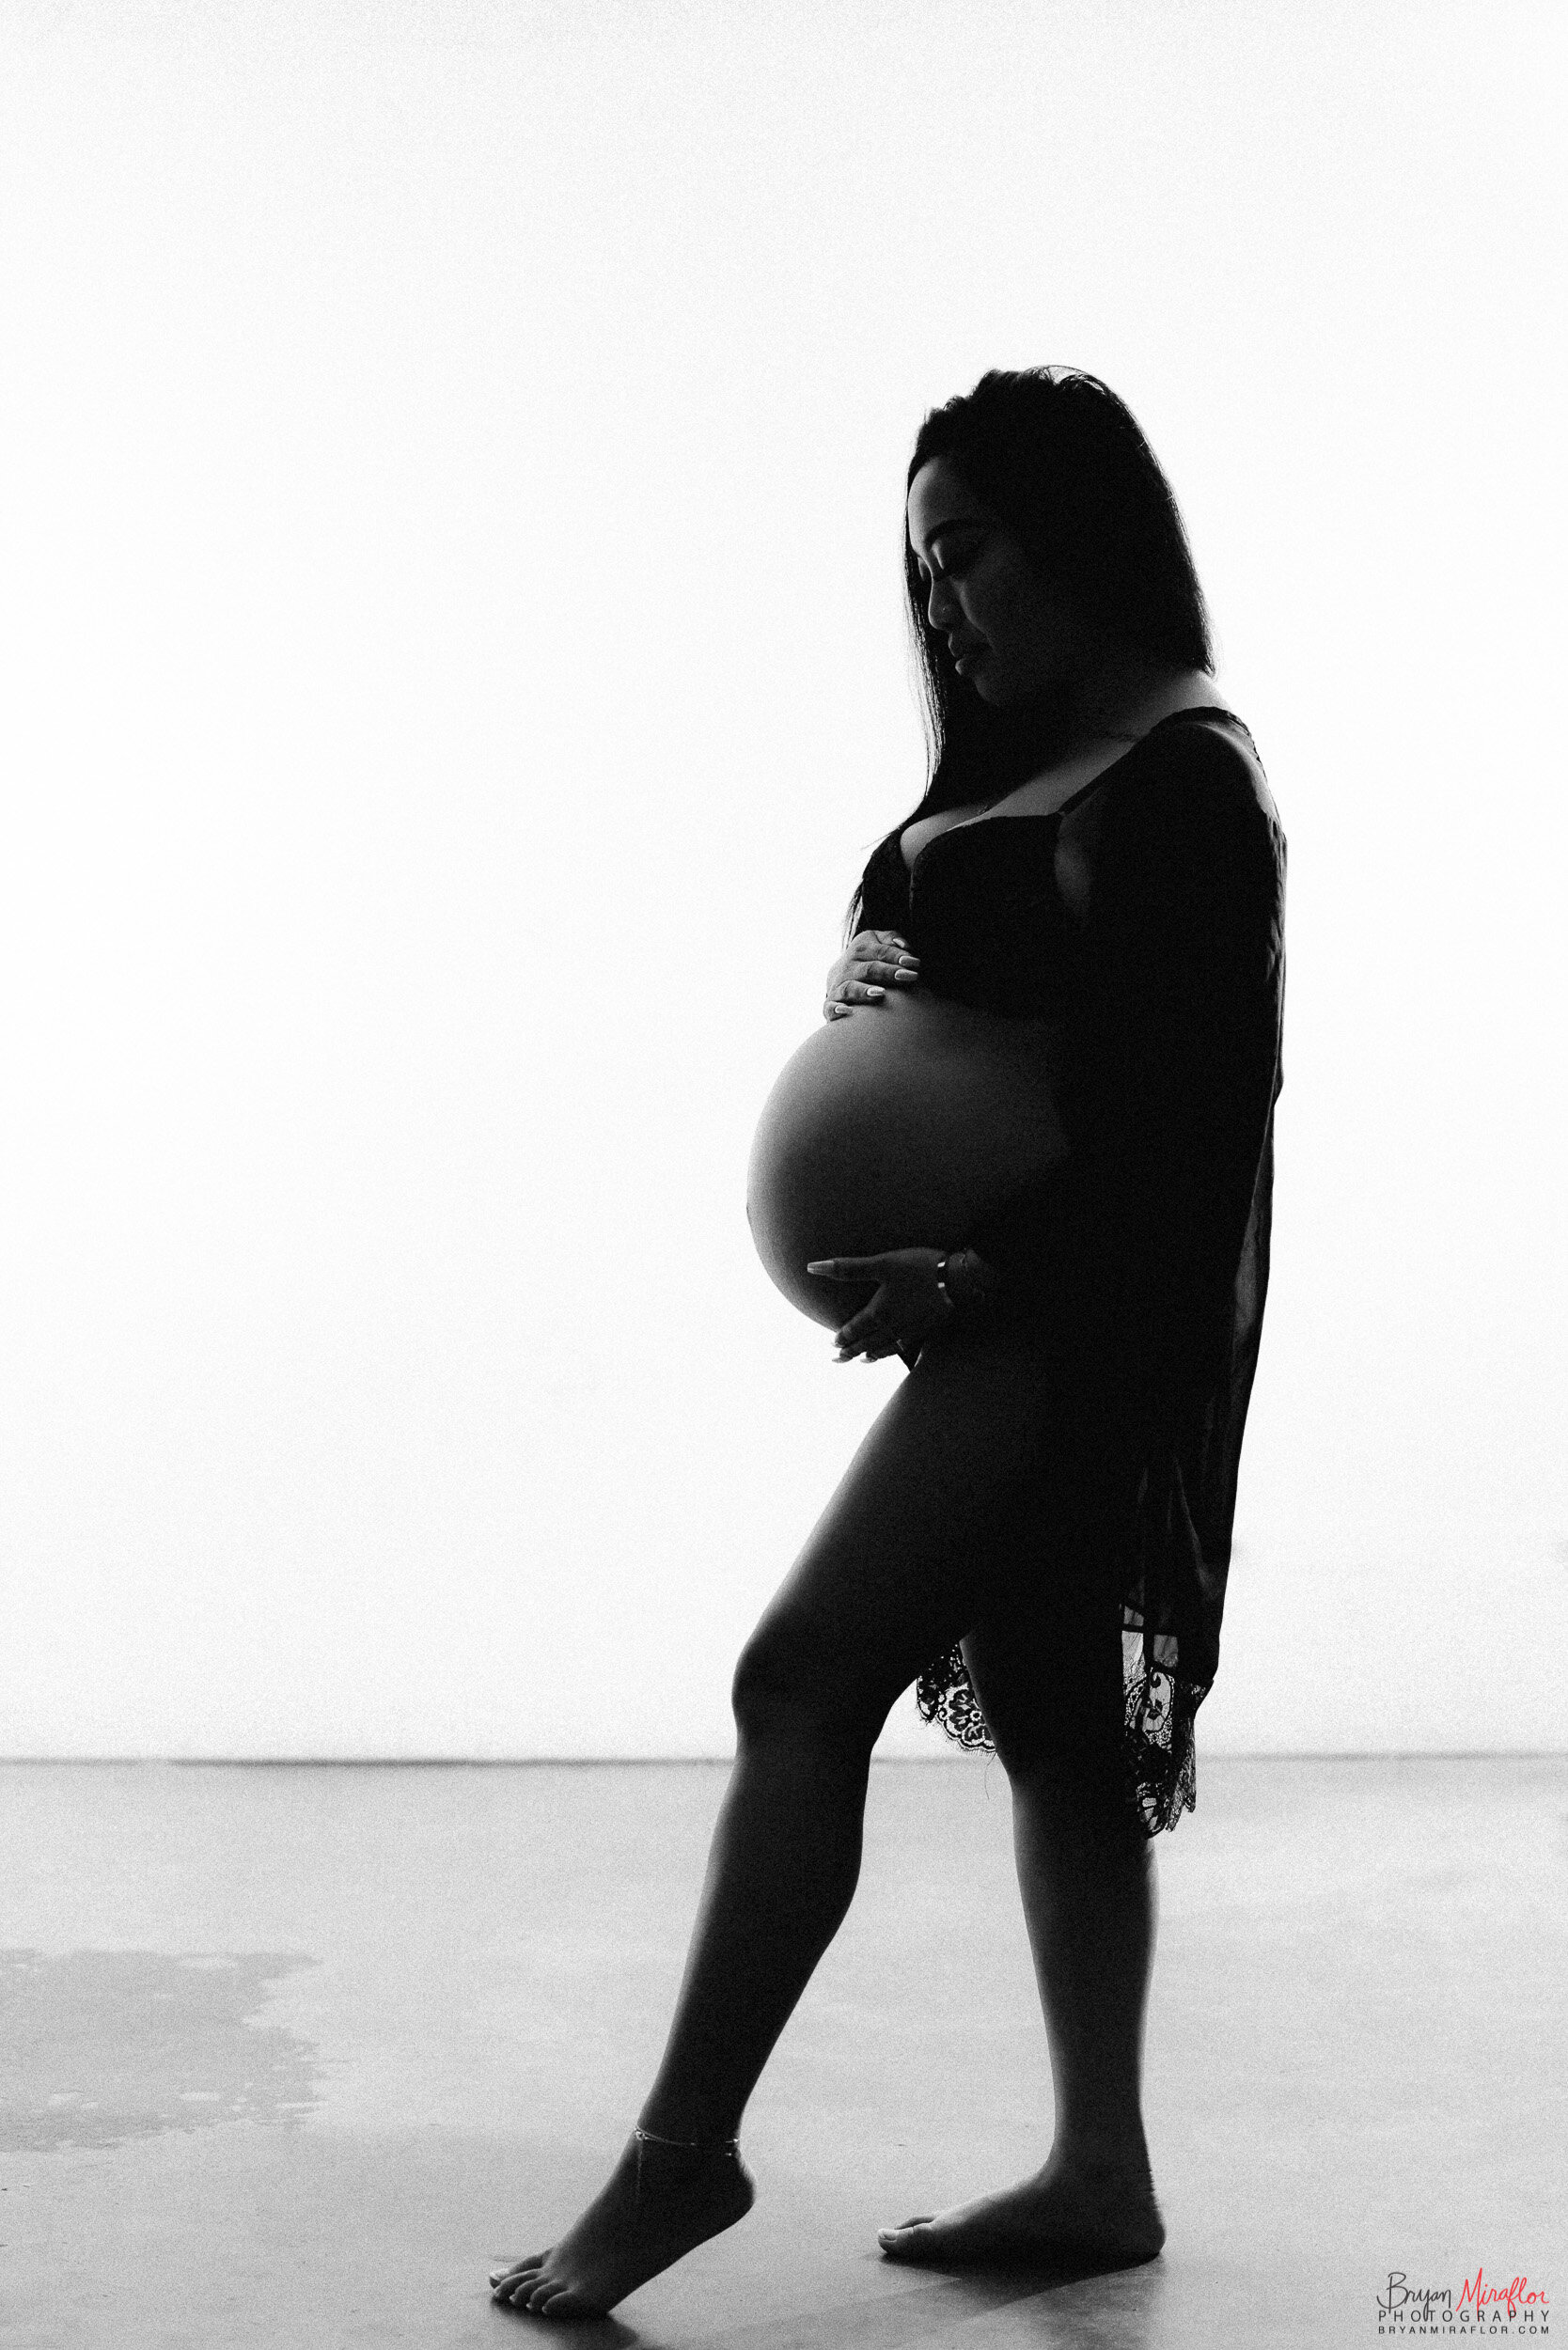 Bryan-Miraflor-Photography-Nguyen-Maternity-Photoshoot-FD-PhotoStudio-2020-006.jpg